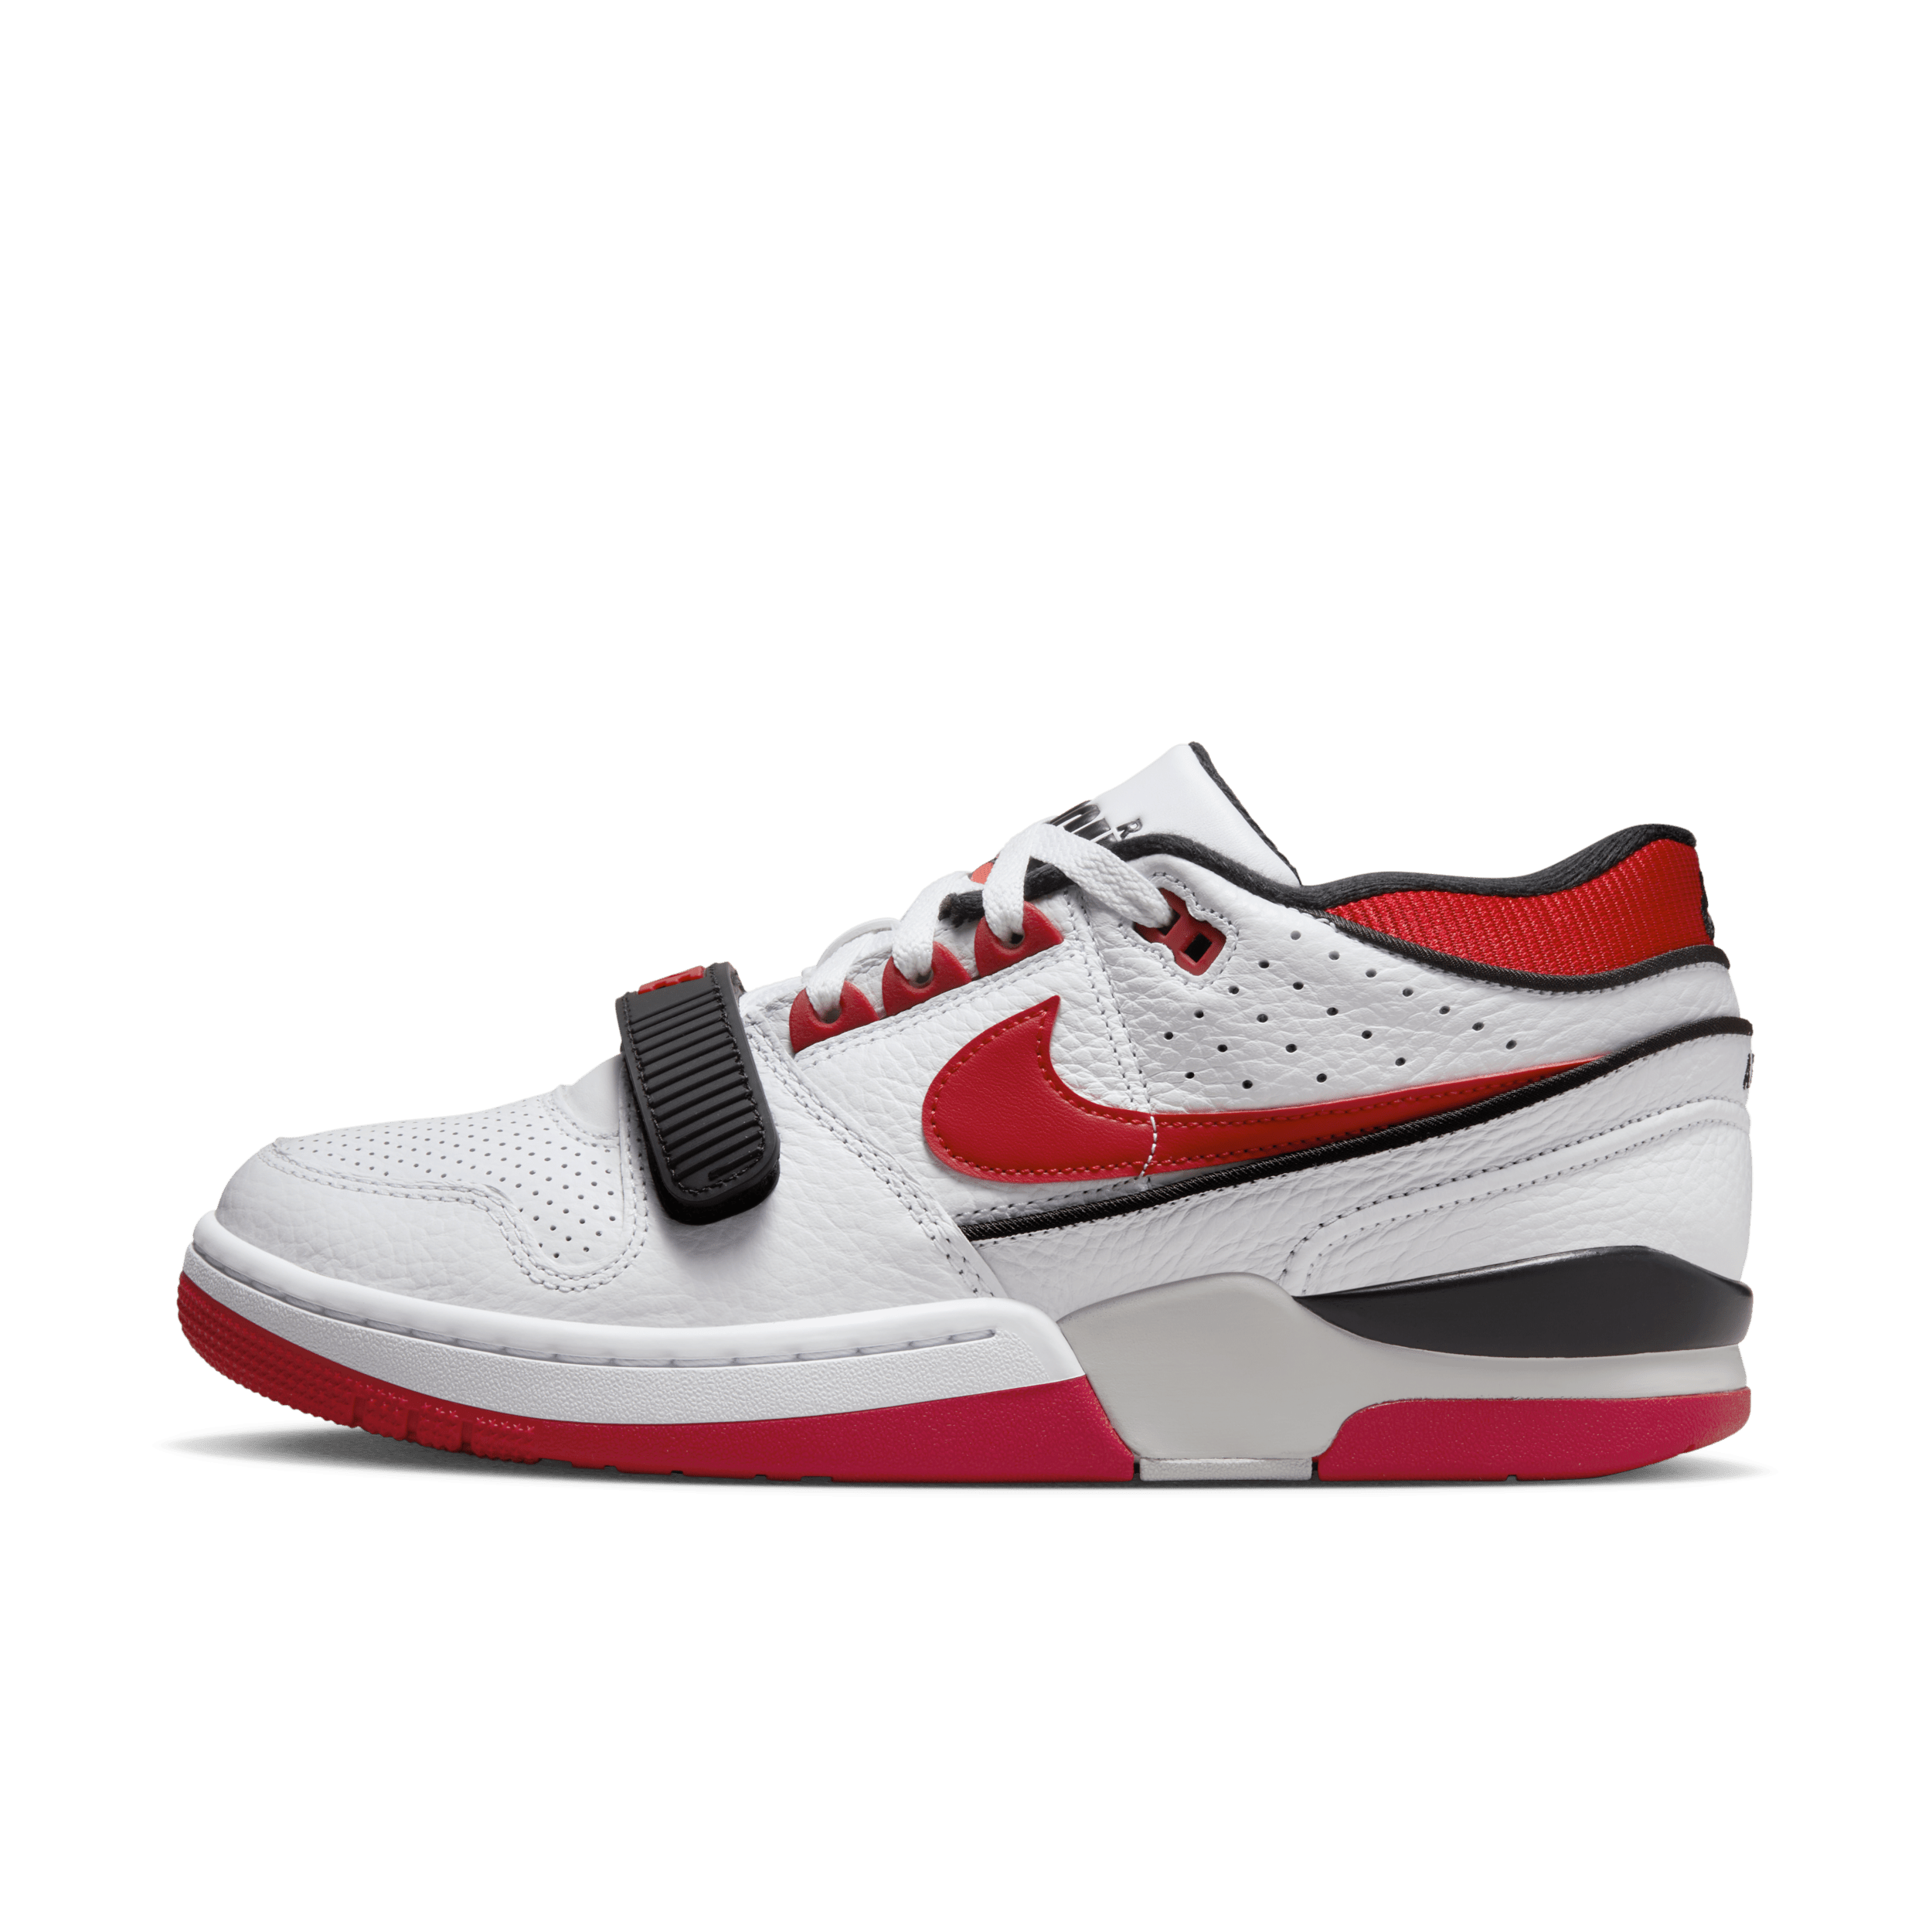 Chaussure Nike Air Alpha Force 88 pour homme - Blanc